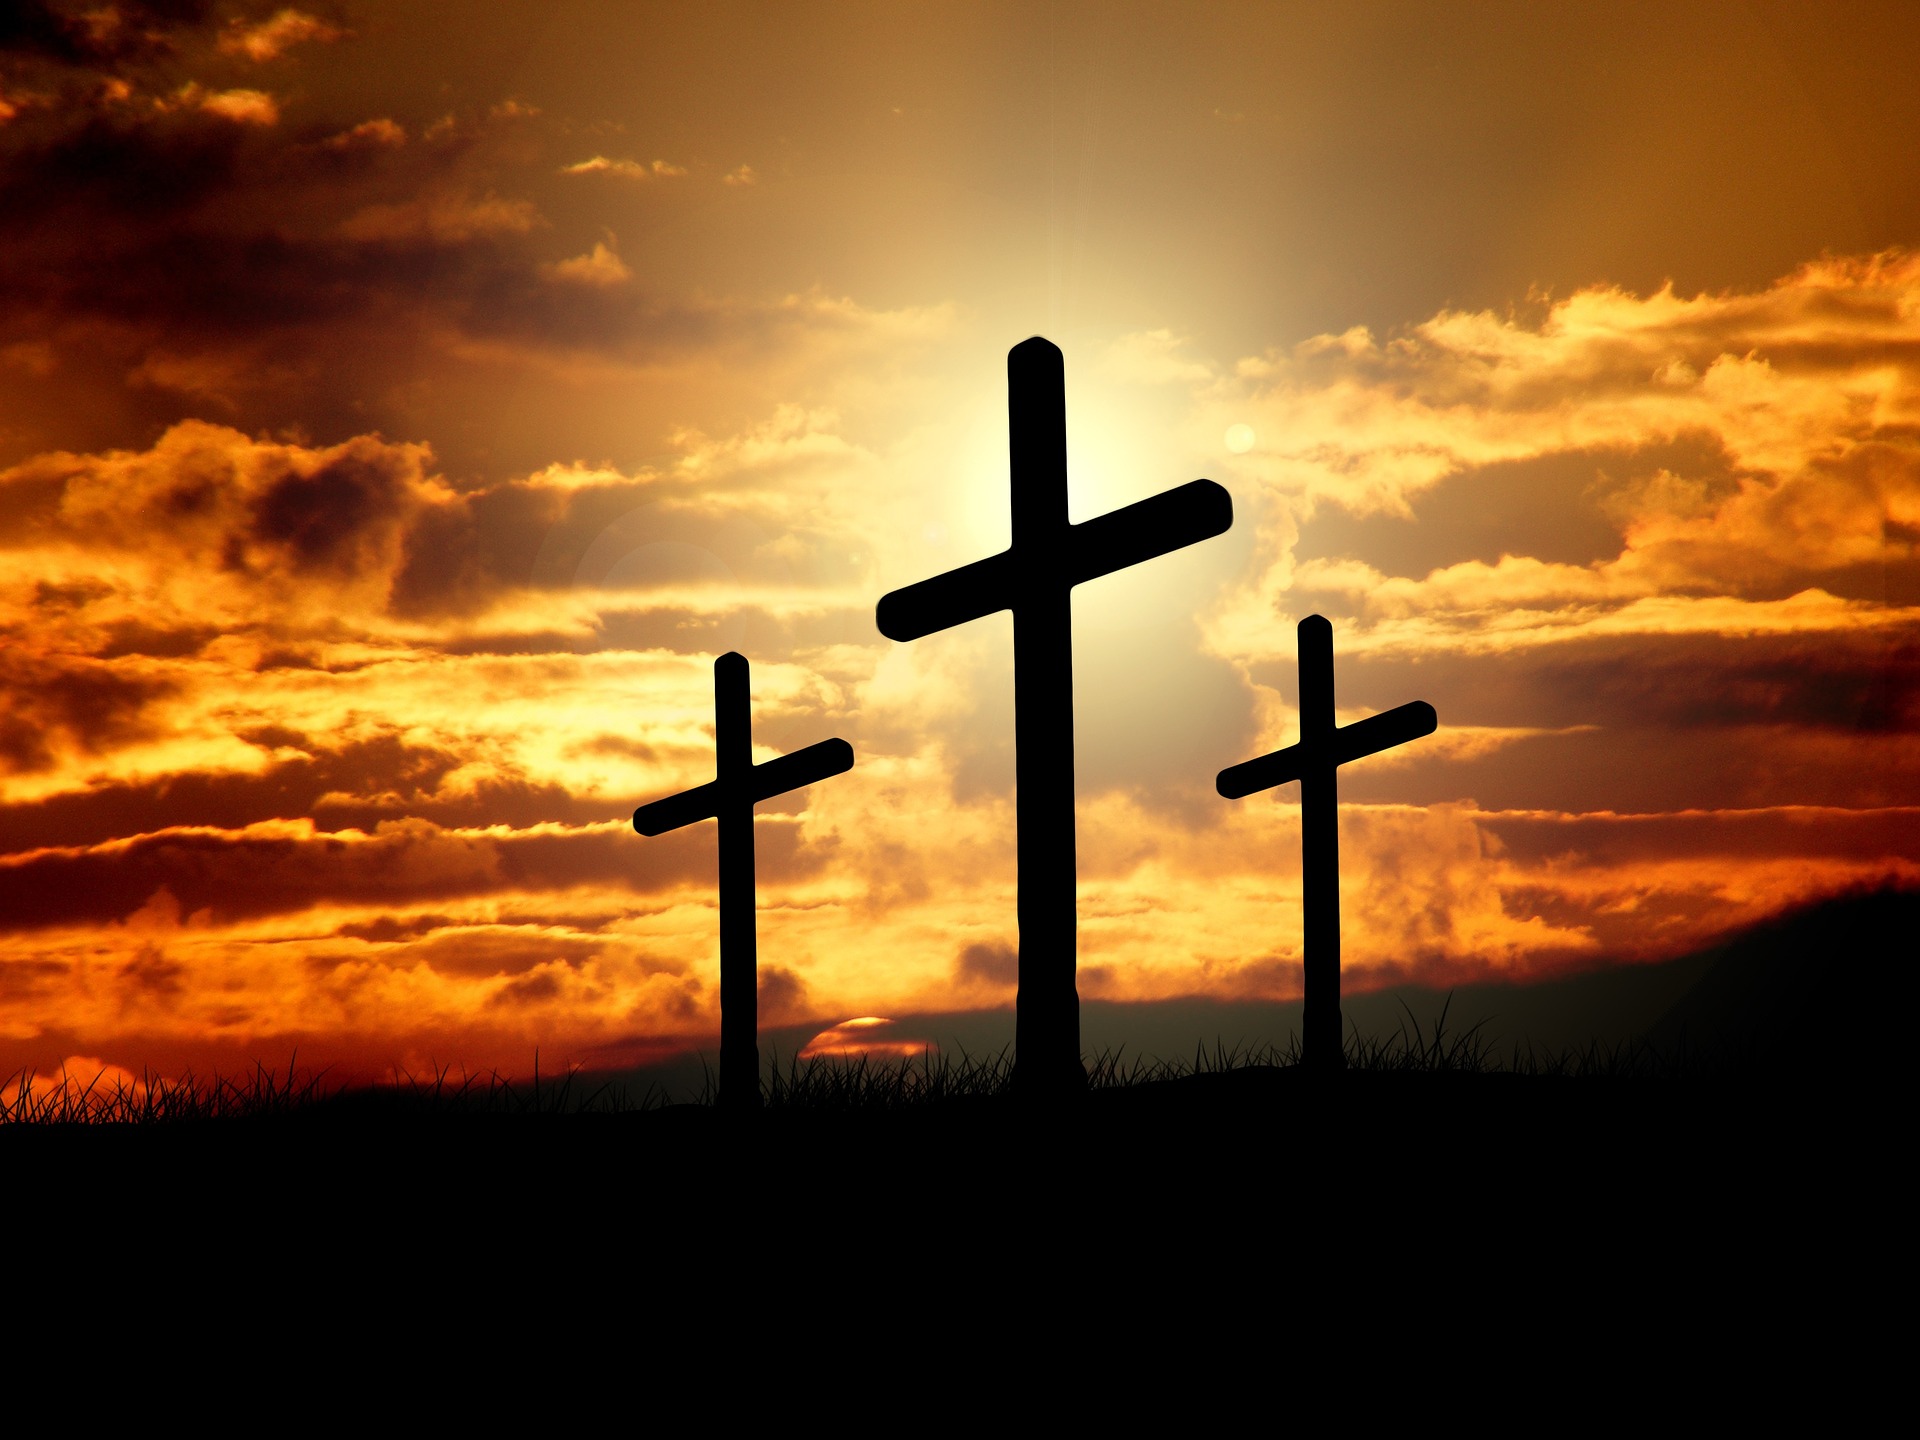 Three crosses in sillhouette